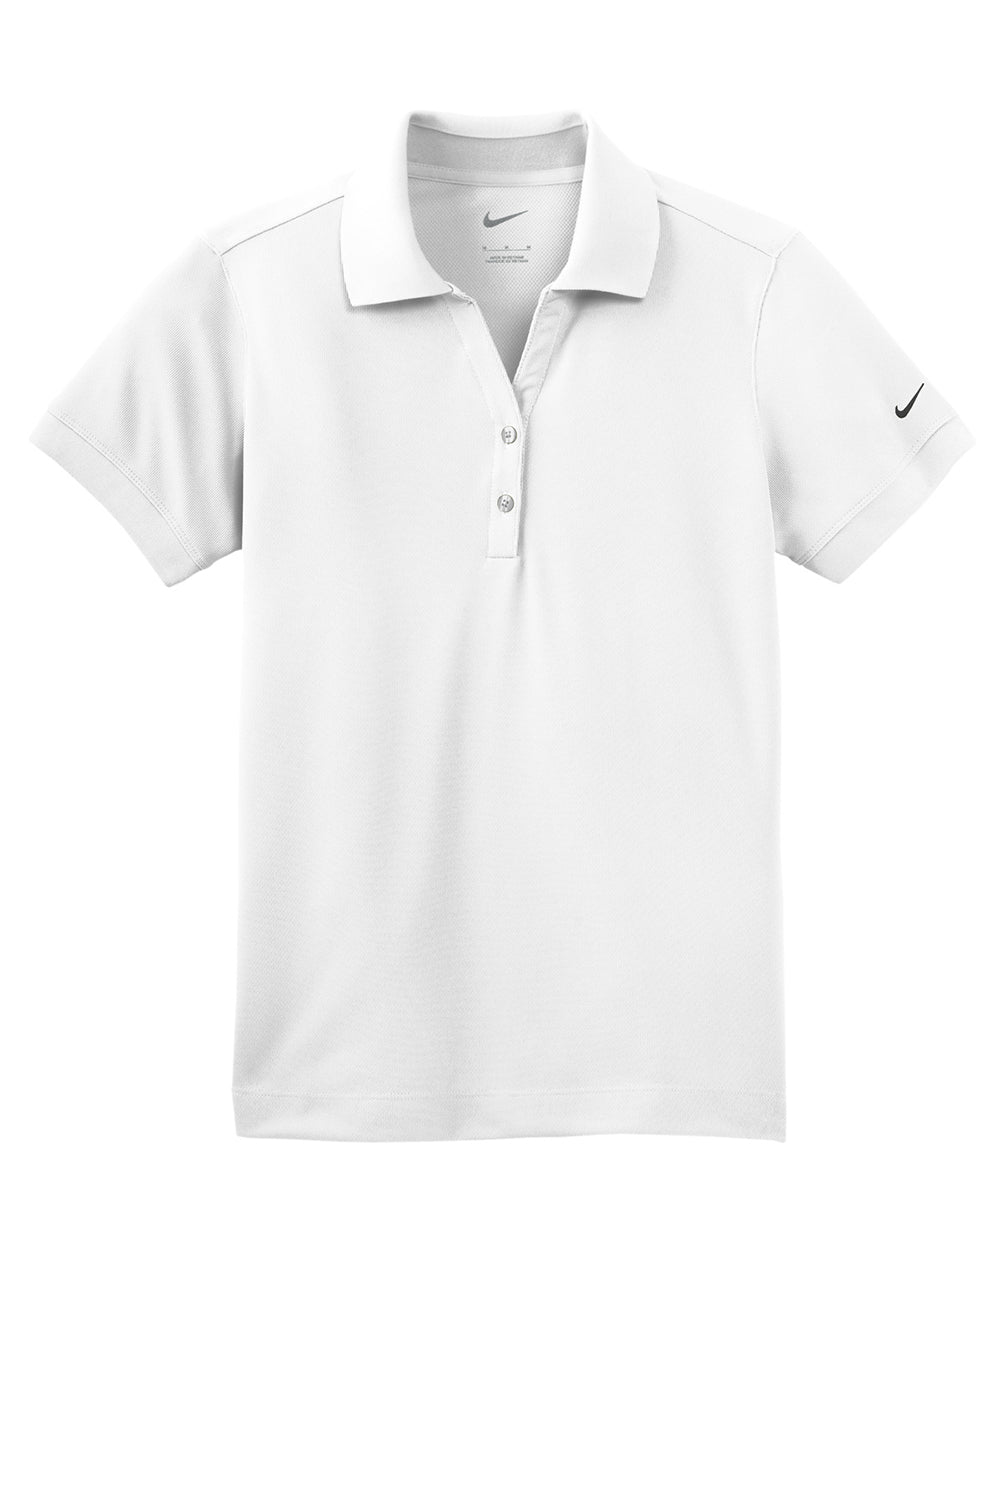 Nike 286772 Womens Classic Dri-Fit Moisture Wicking Short Sleeve Polo Shirt White Flat Front